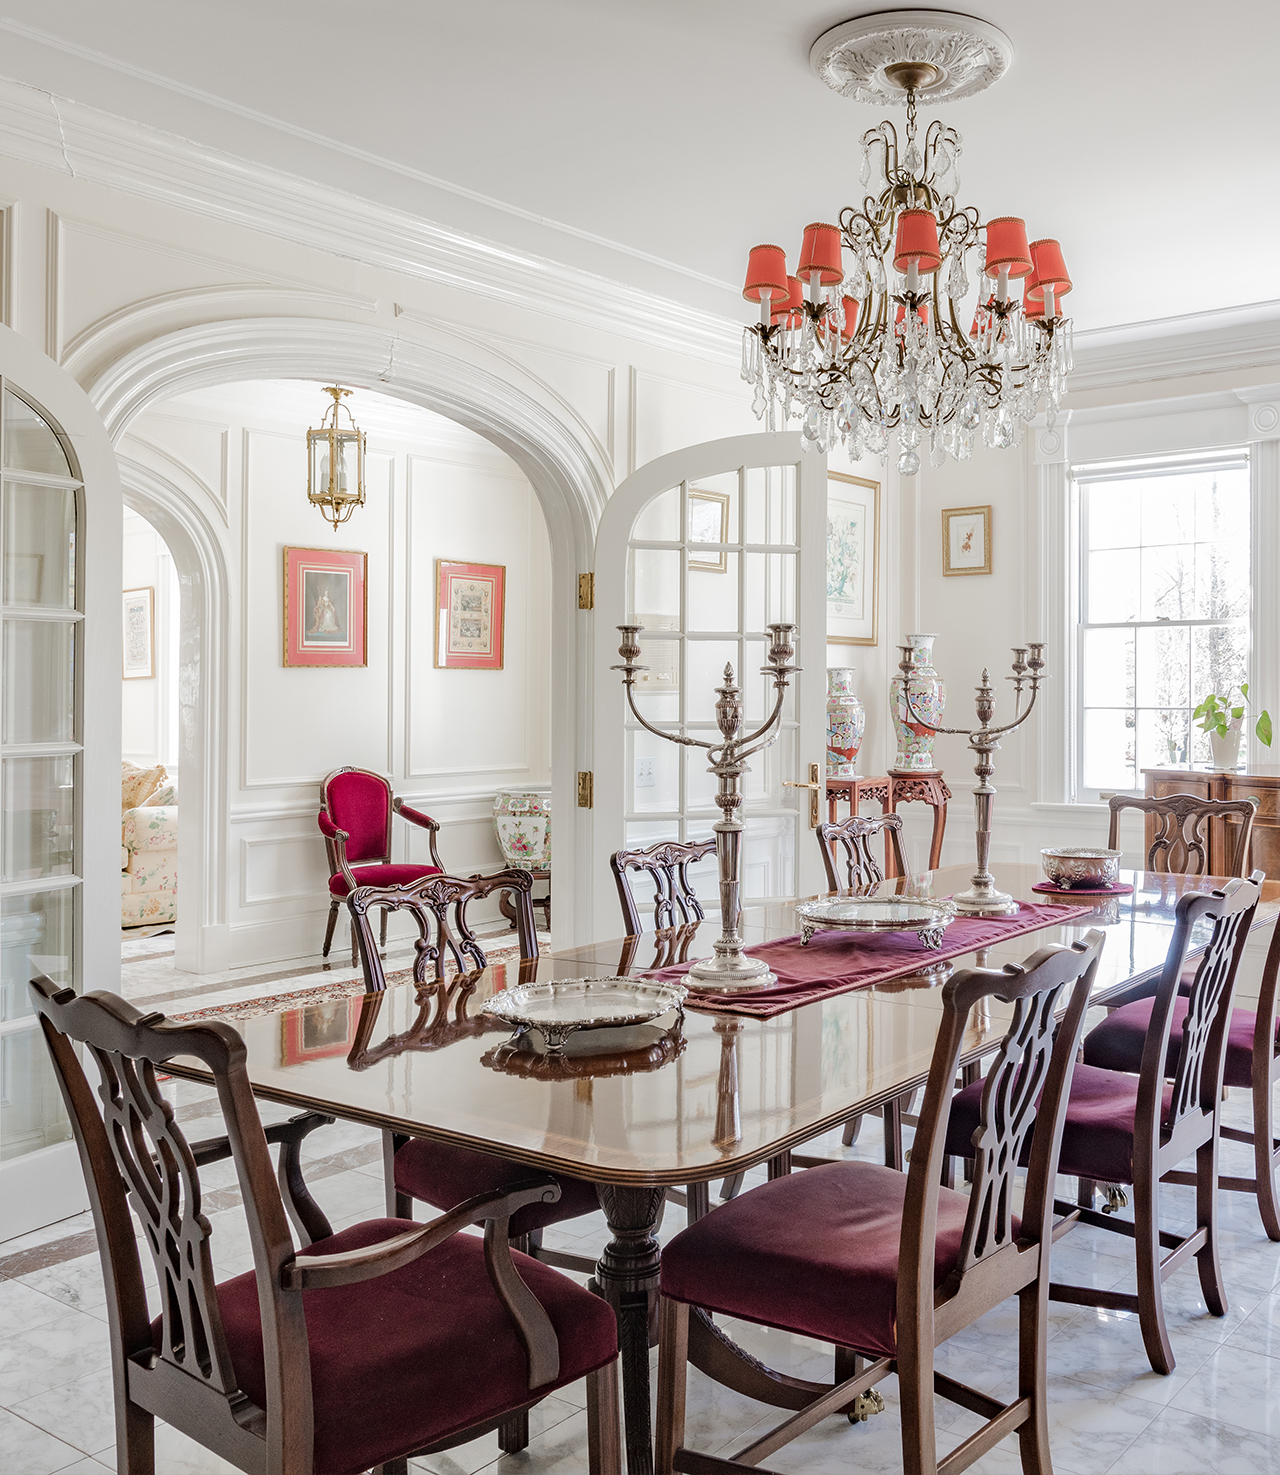 East Hampton's "White House's" formal dining room.